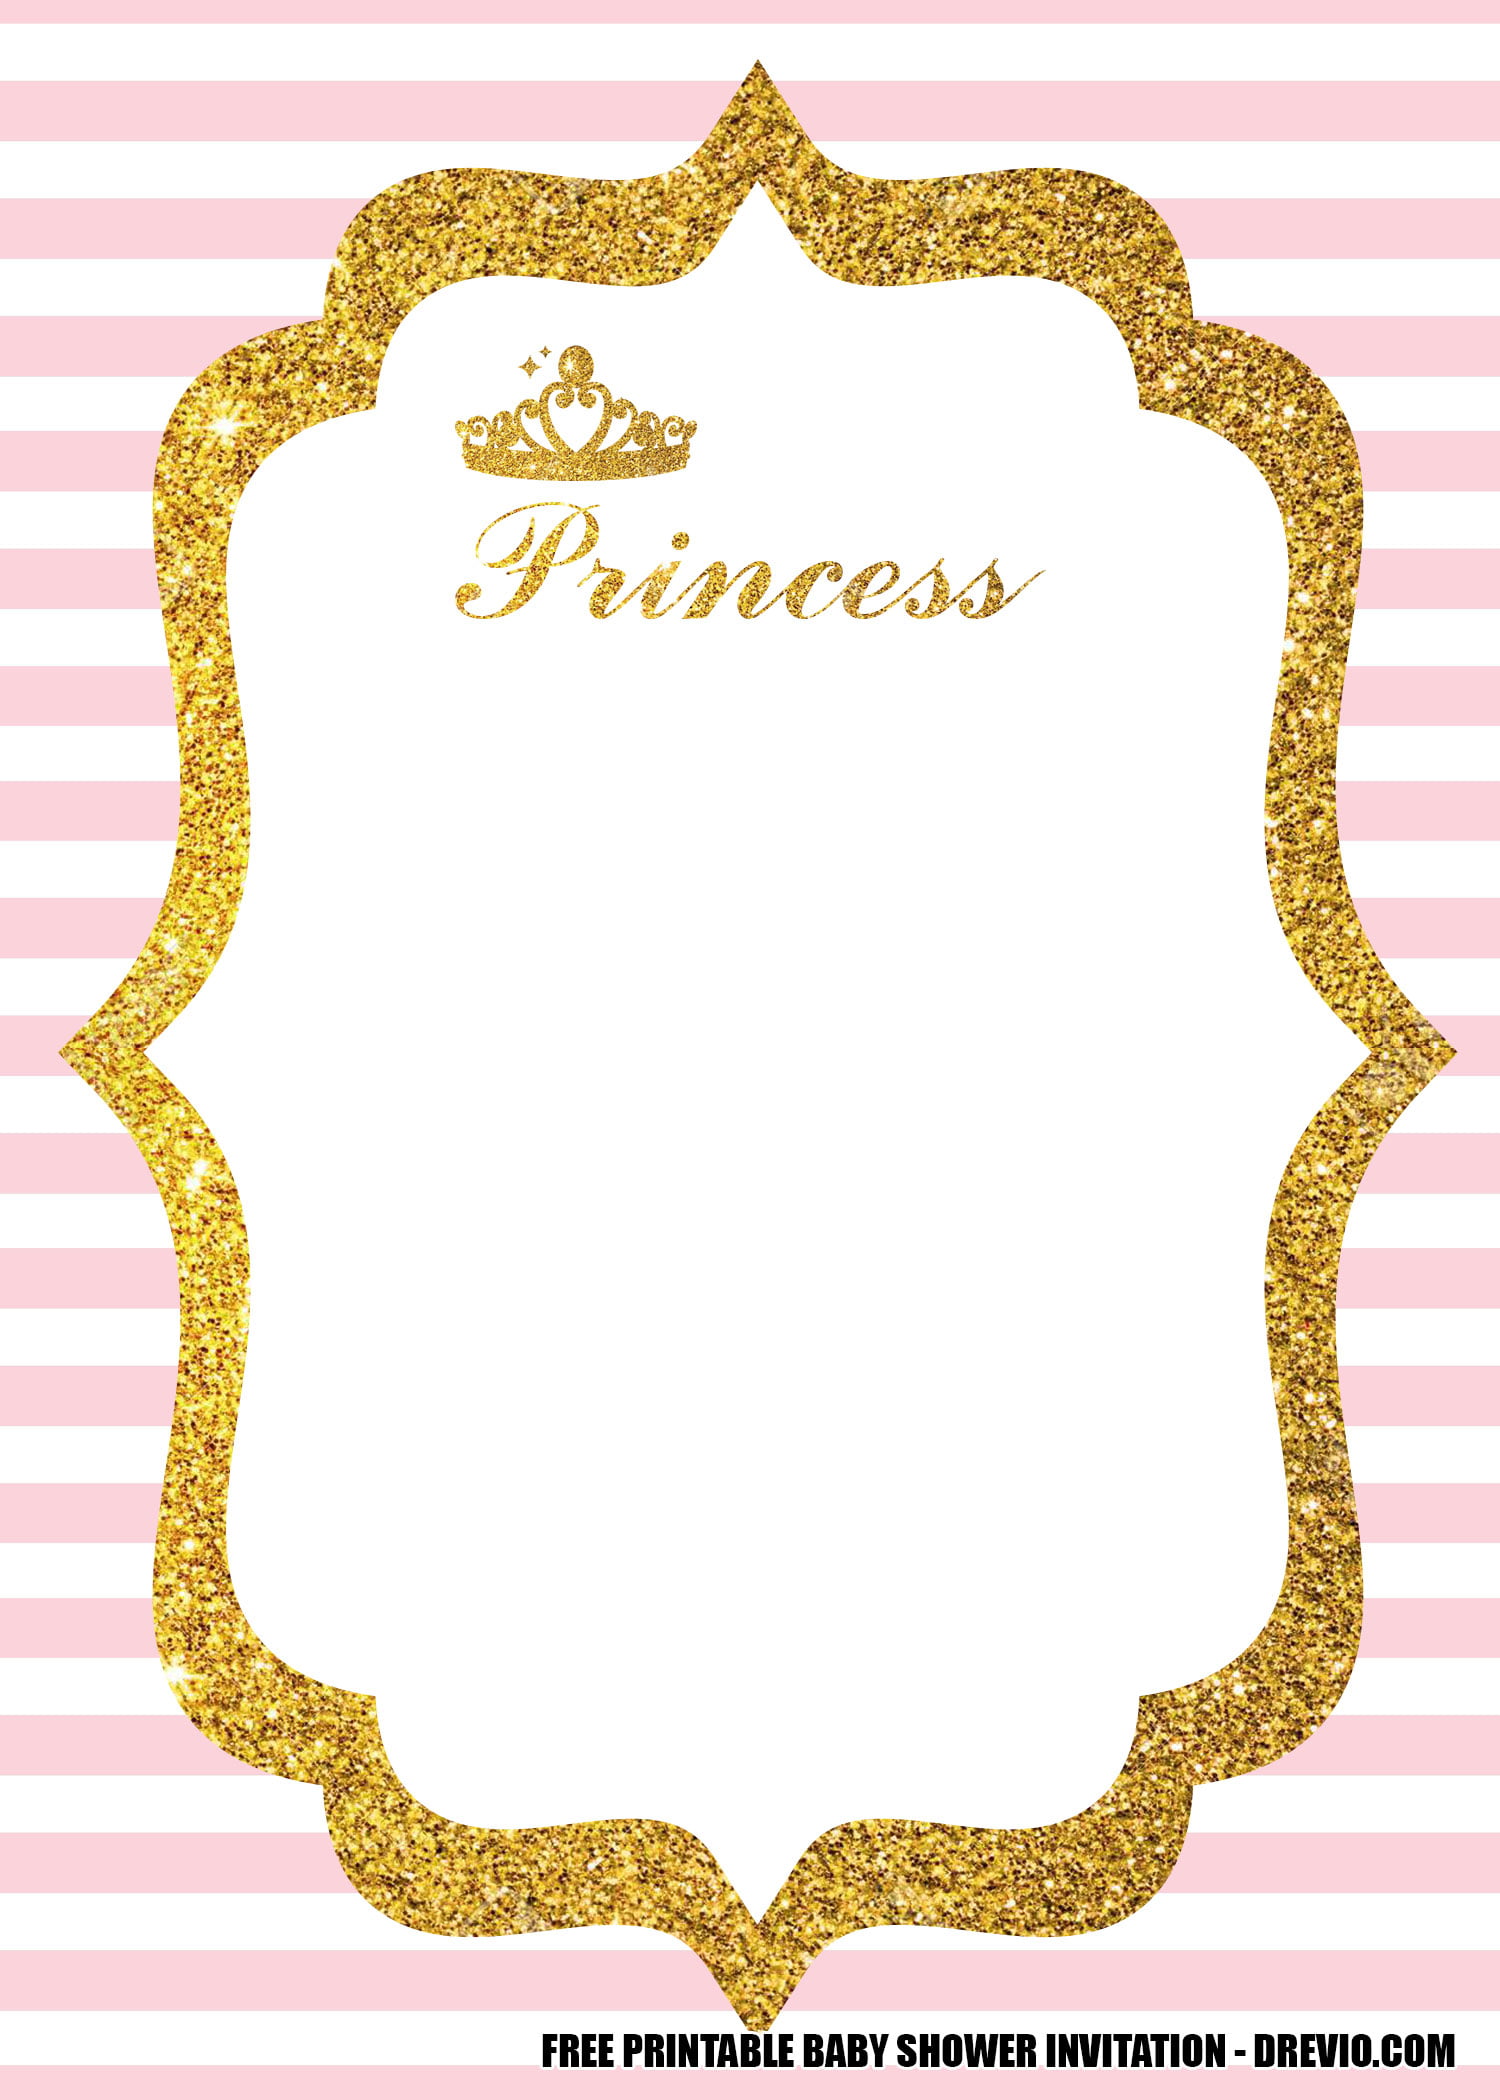 Princess Invitation Template Free